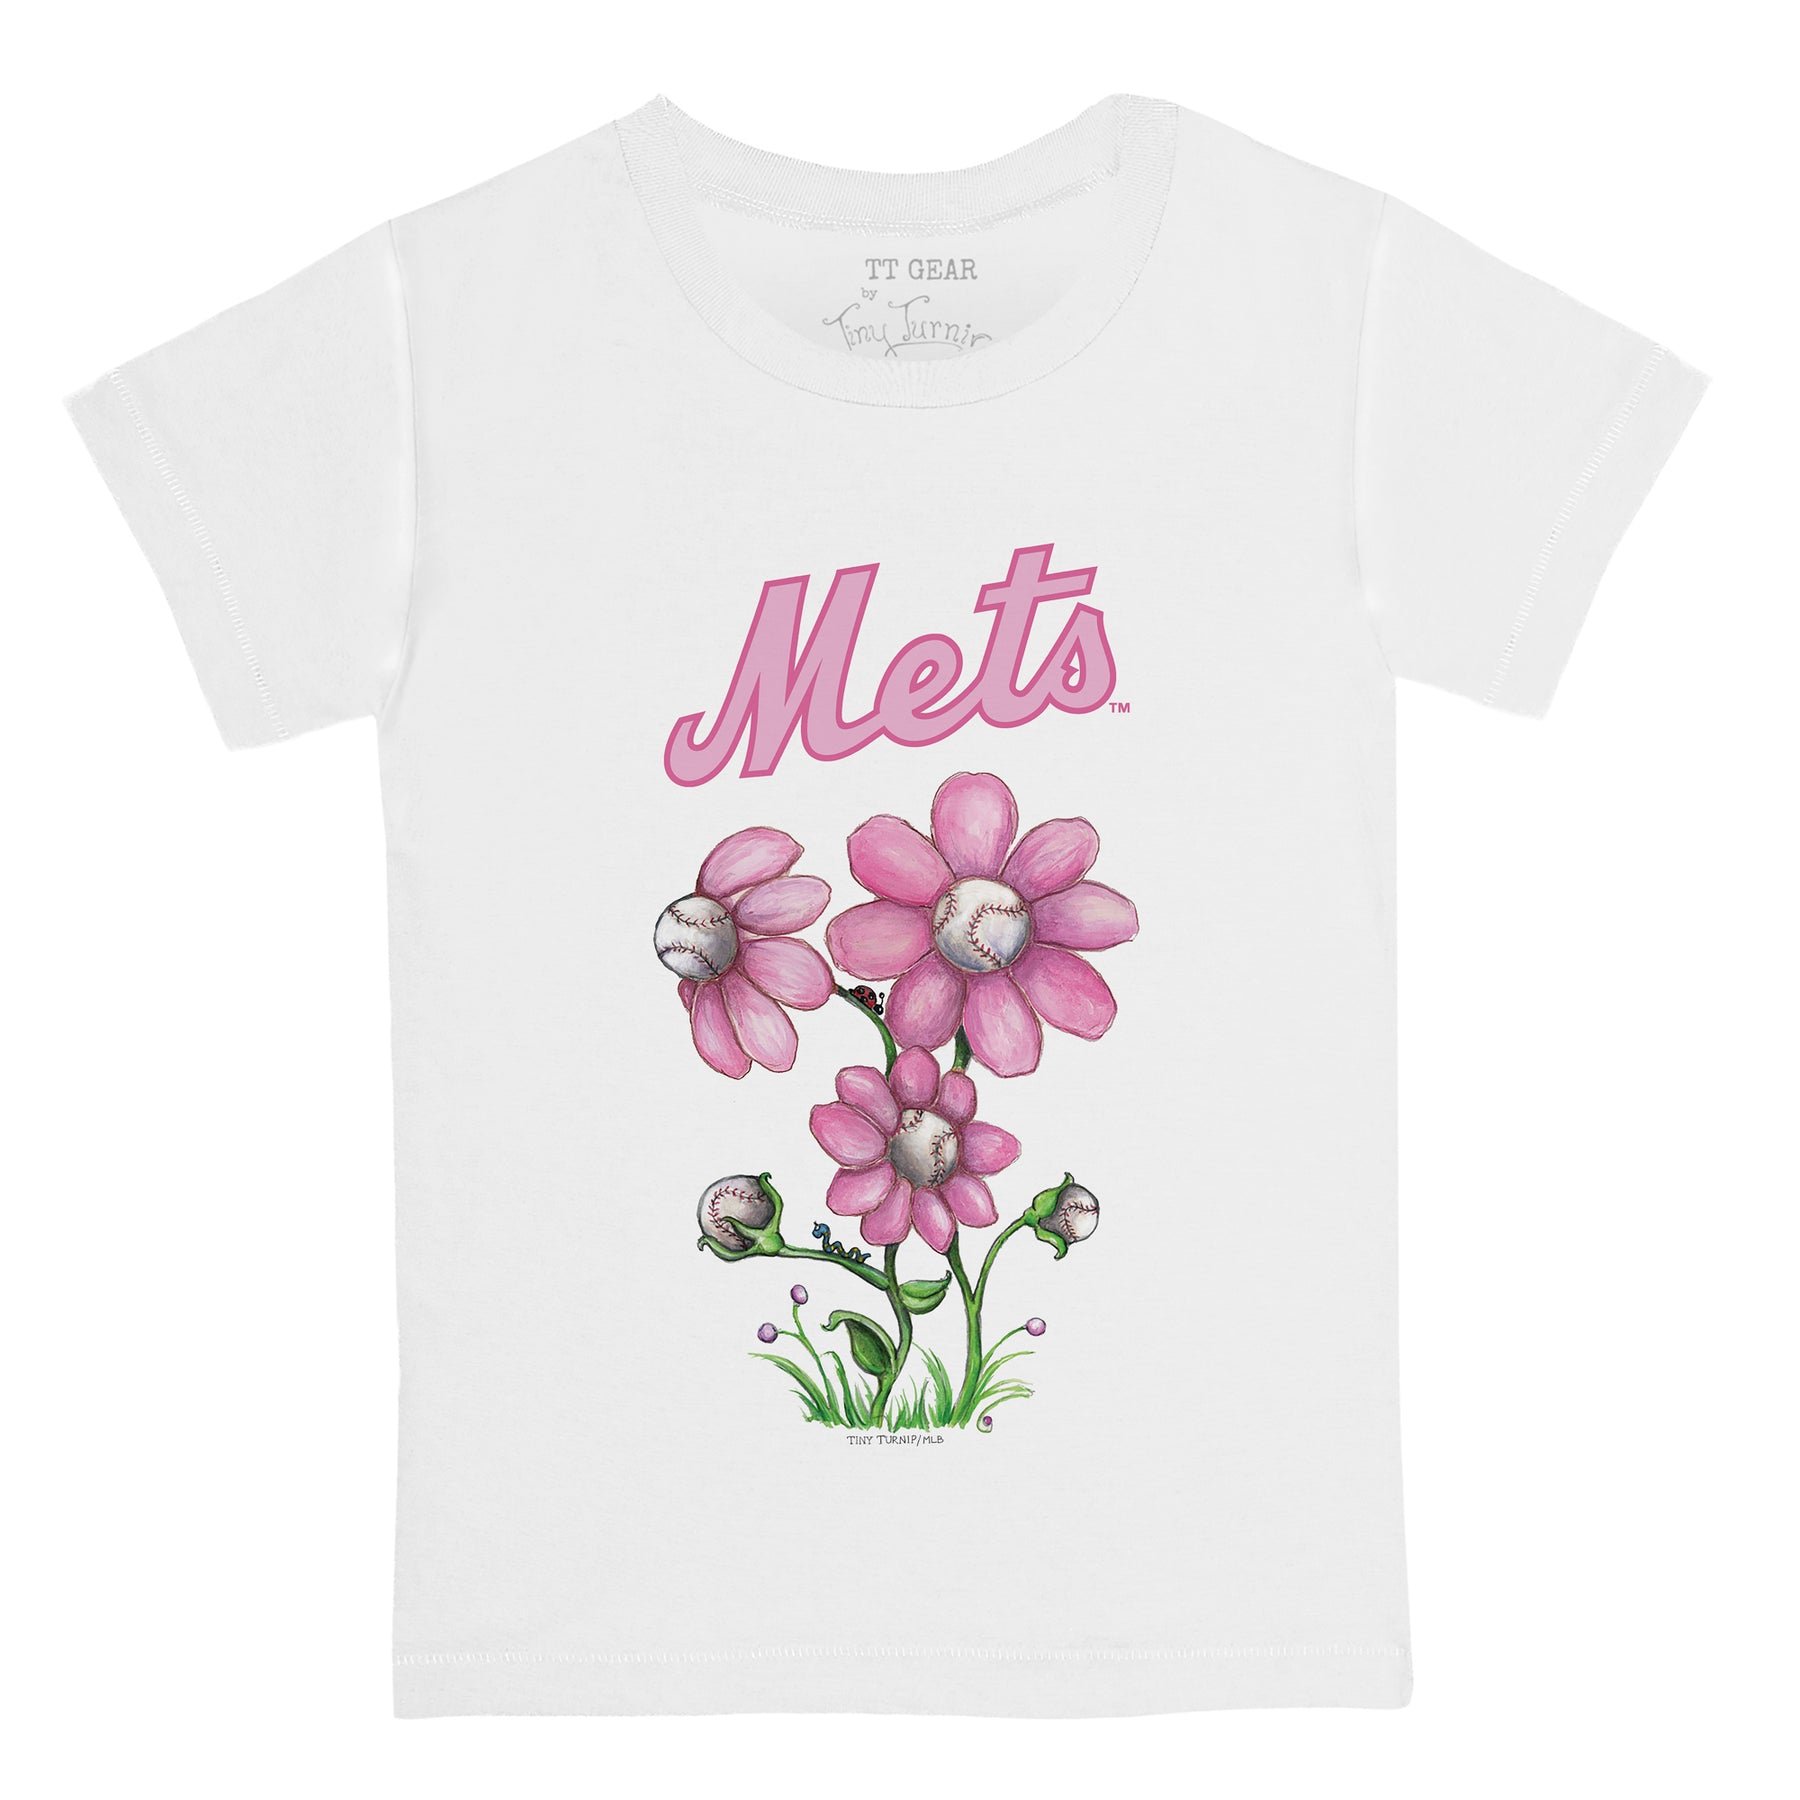 New York Mets Blooming Baseballs Tee Shirt